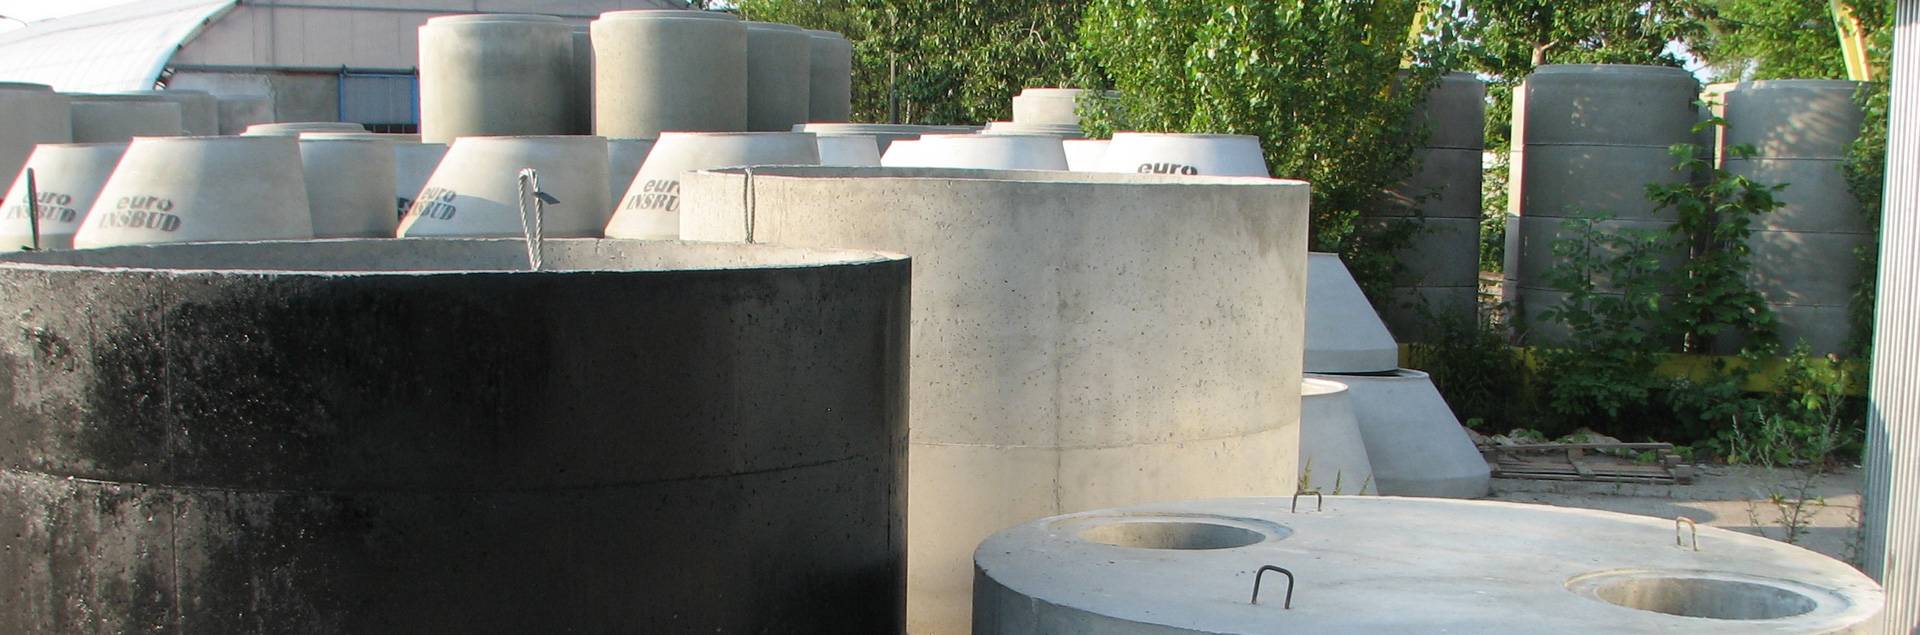 betonowe zbiorniki